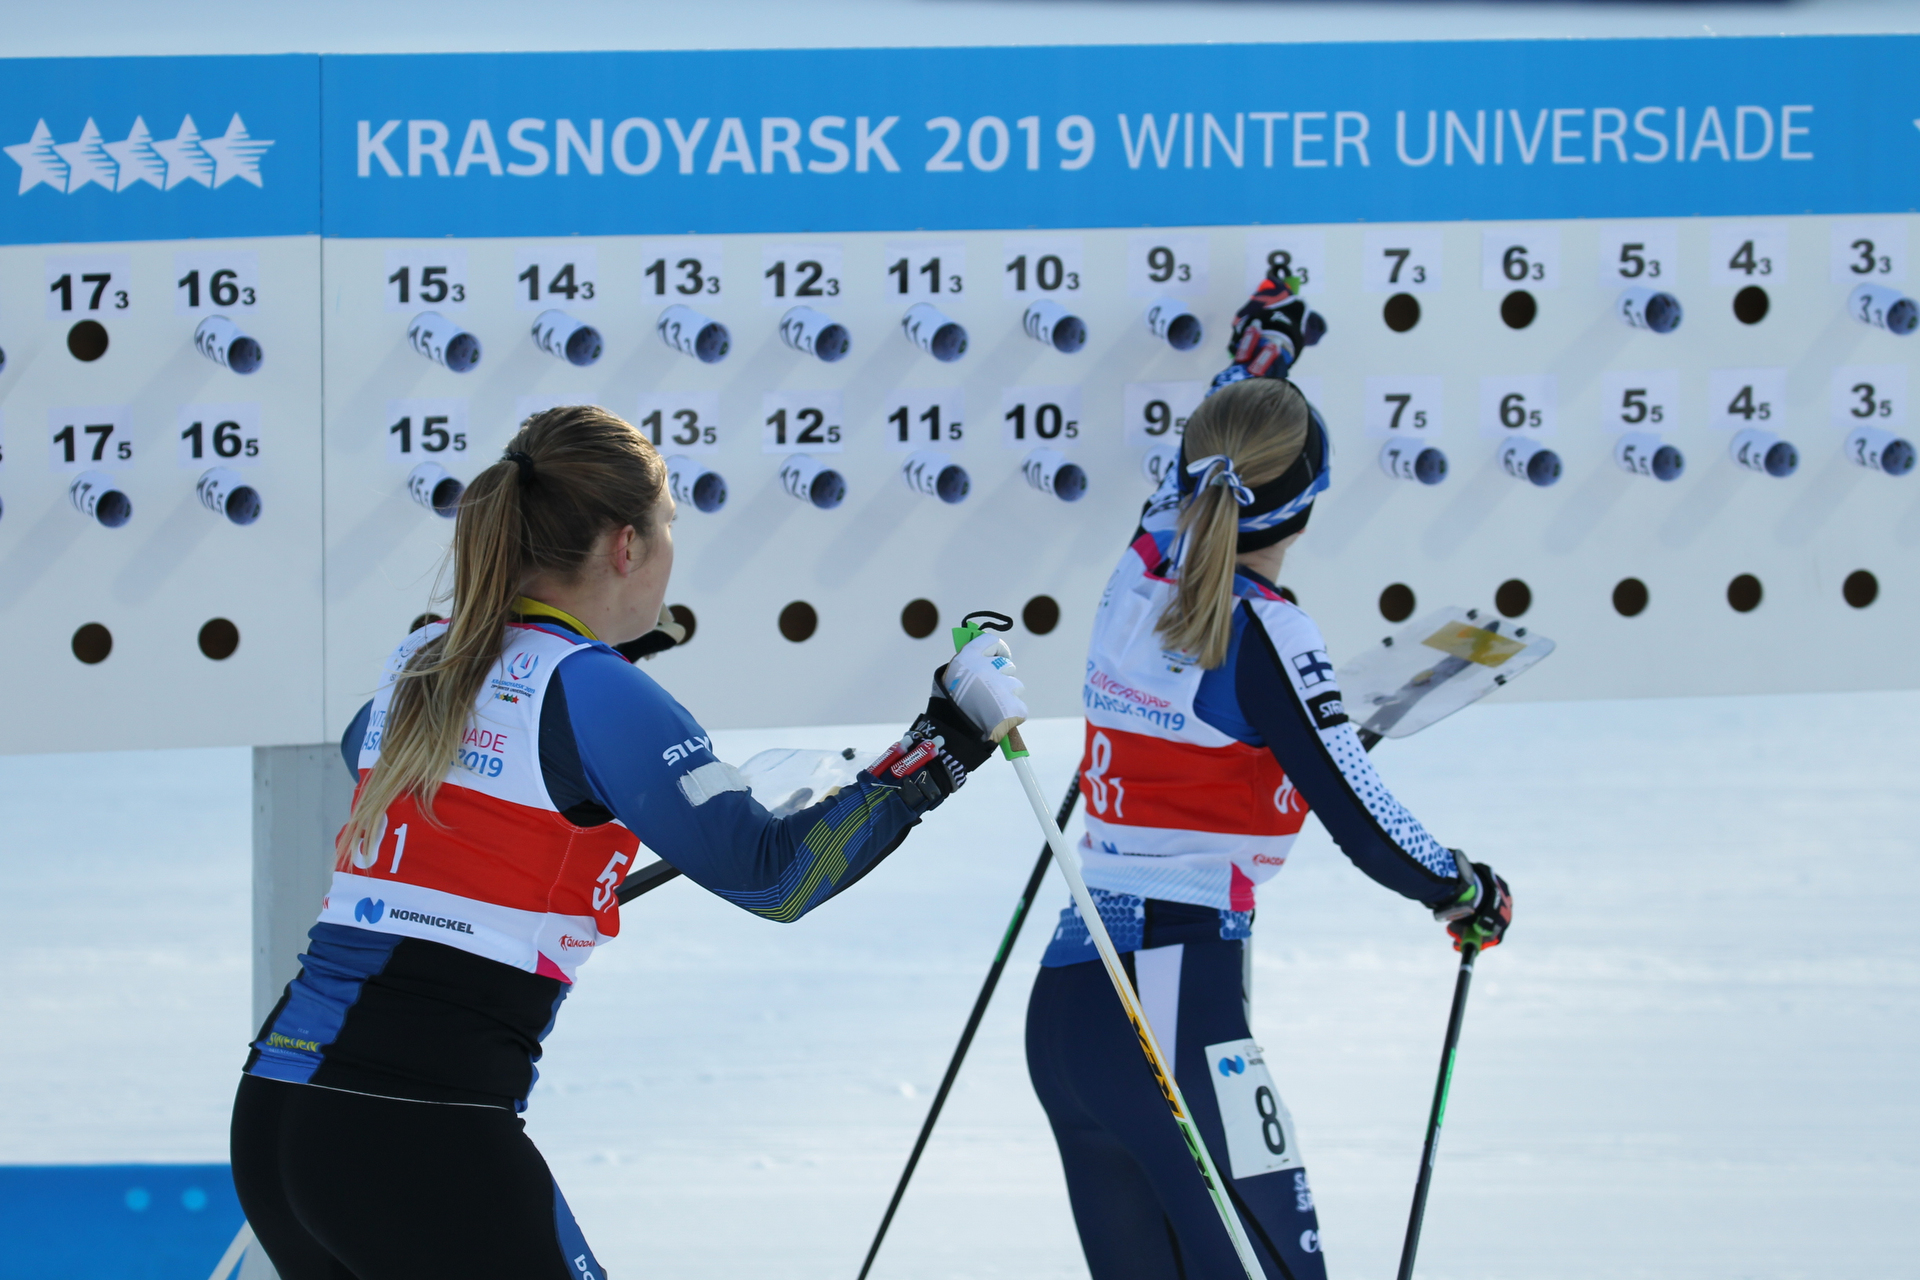 Russia were victorious in the ski orienteering mixed team event ©Krasnoyarsk 2019